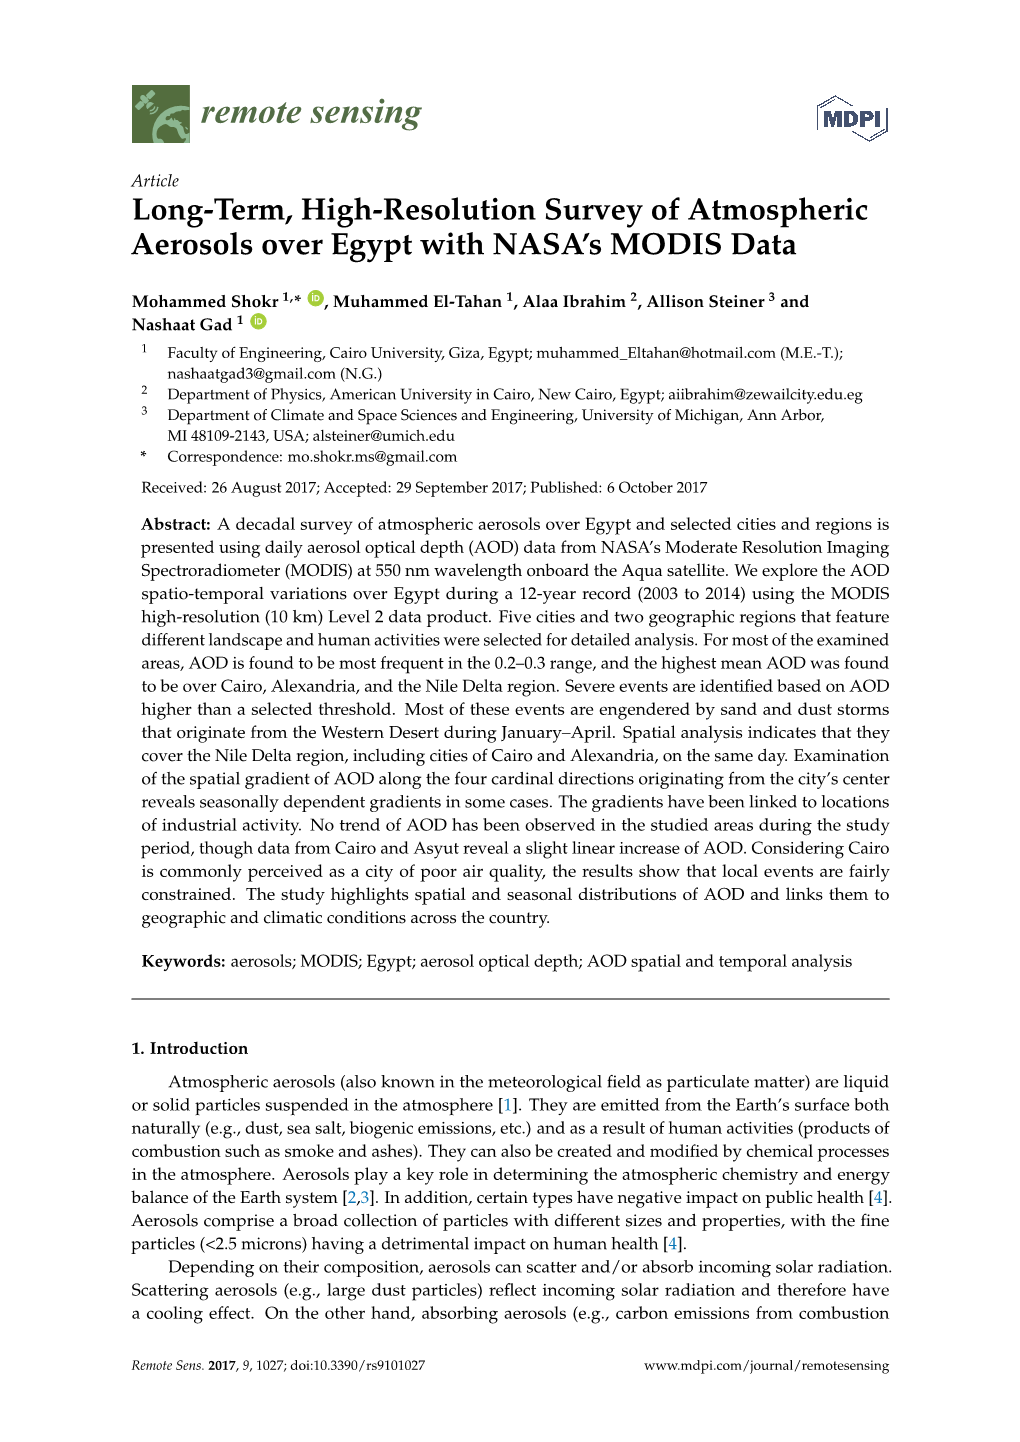 Long-Term, High-Resolution Survey of Atmospheric Aerosols Over Egypt with NASA’S MODIS Data